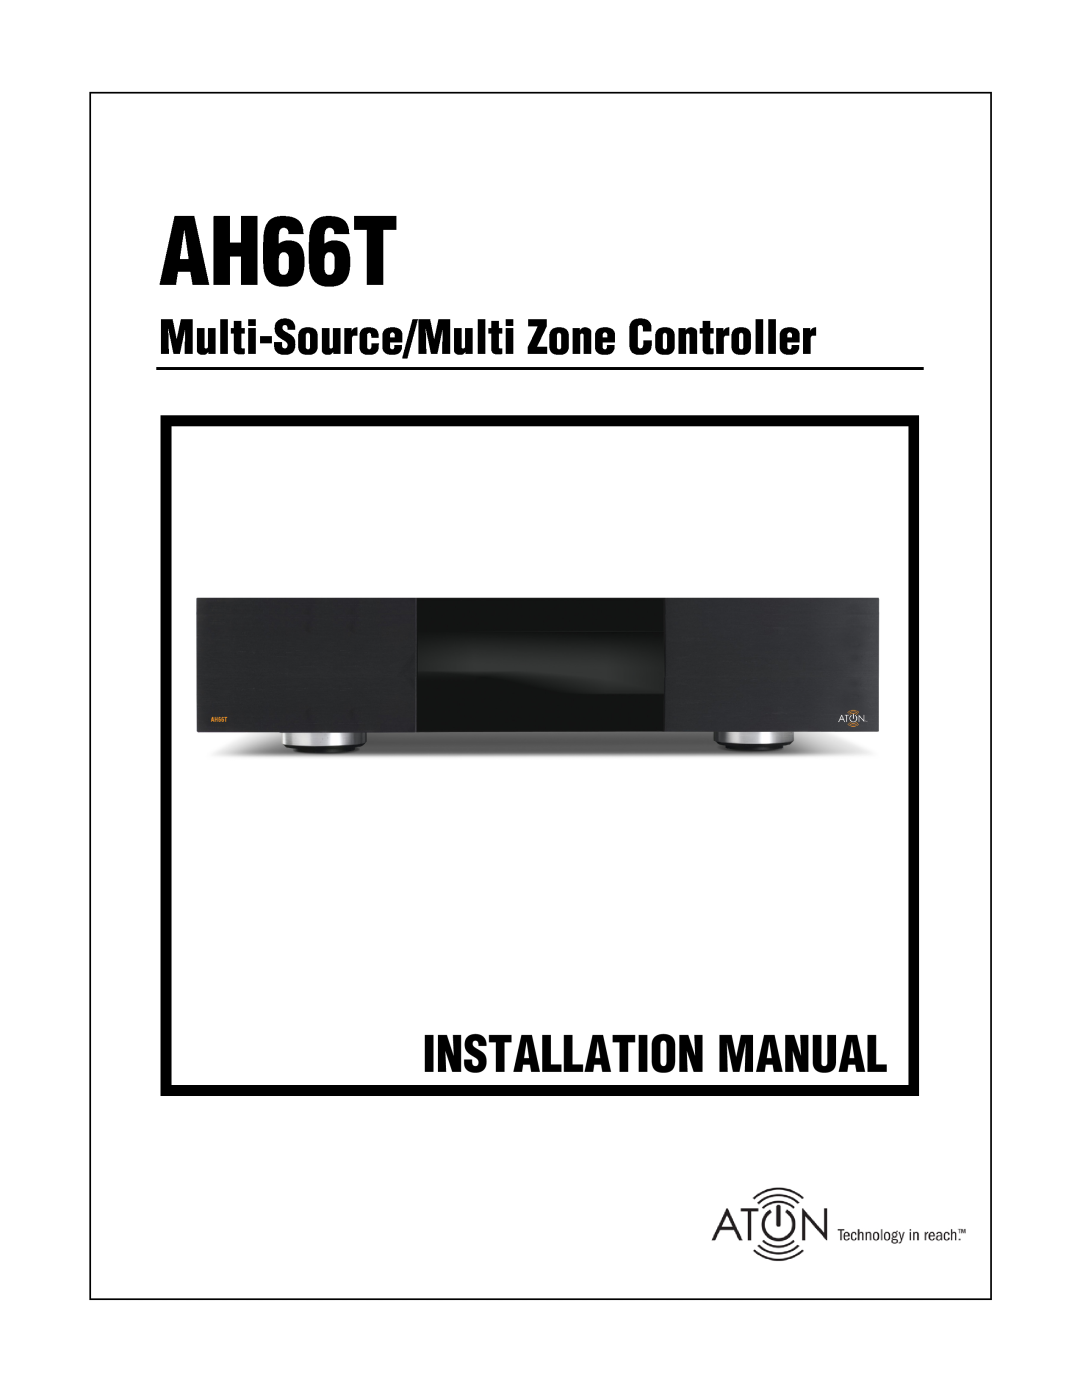 ATON AH66T-KT installation manual Installation Manual, Multi-Source/MultiZone Controller 